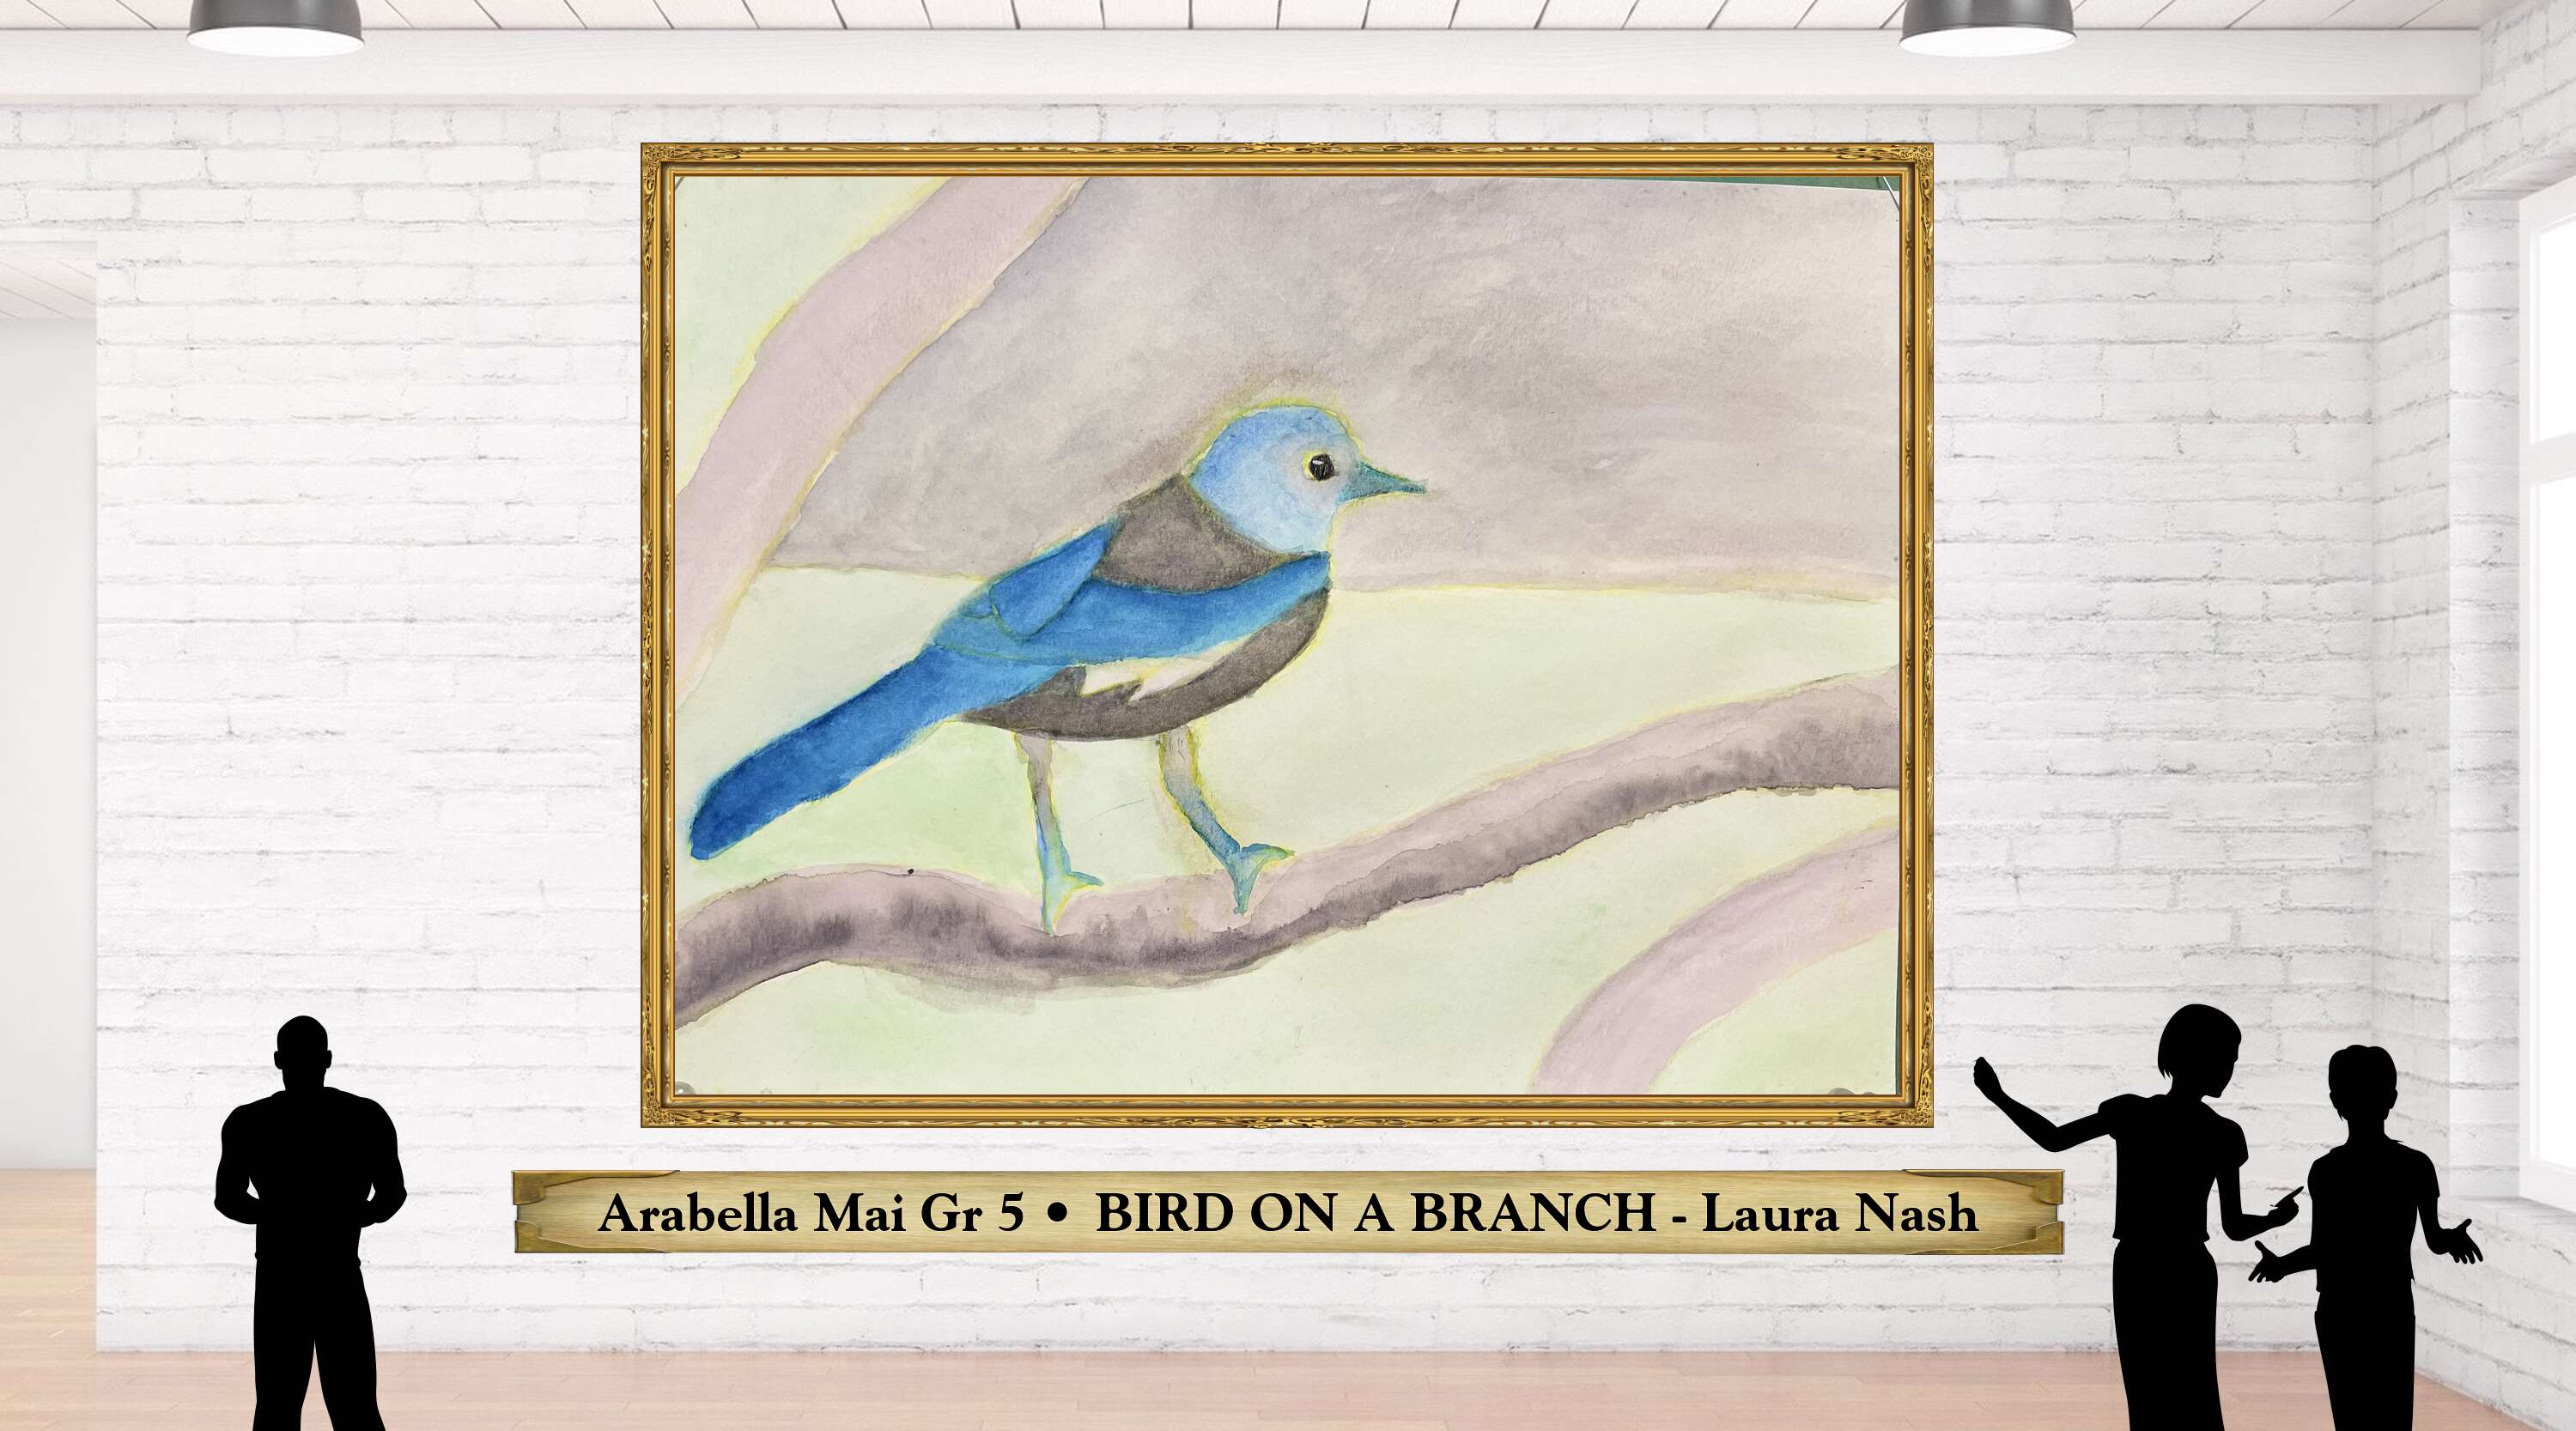 Arabella Mai Gr 5 • BIRD ON A BRANCH - Laura Nash